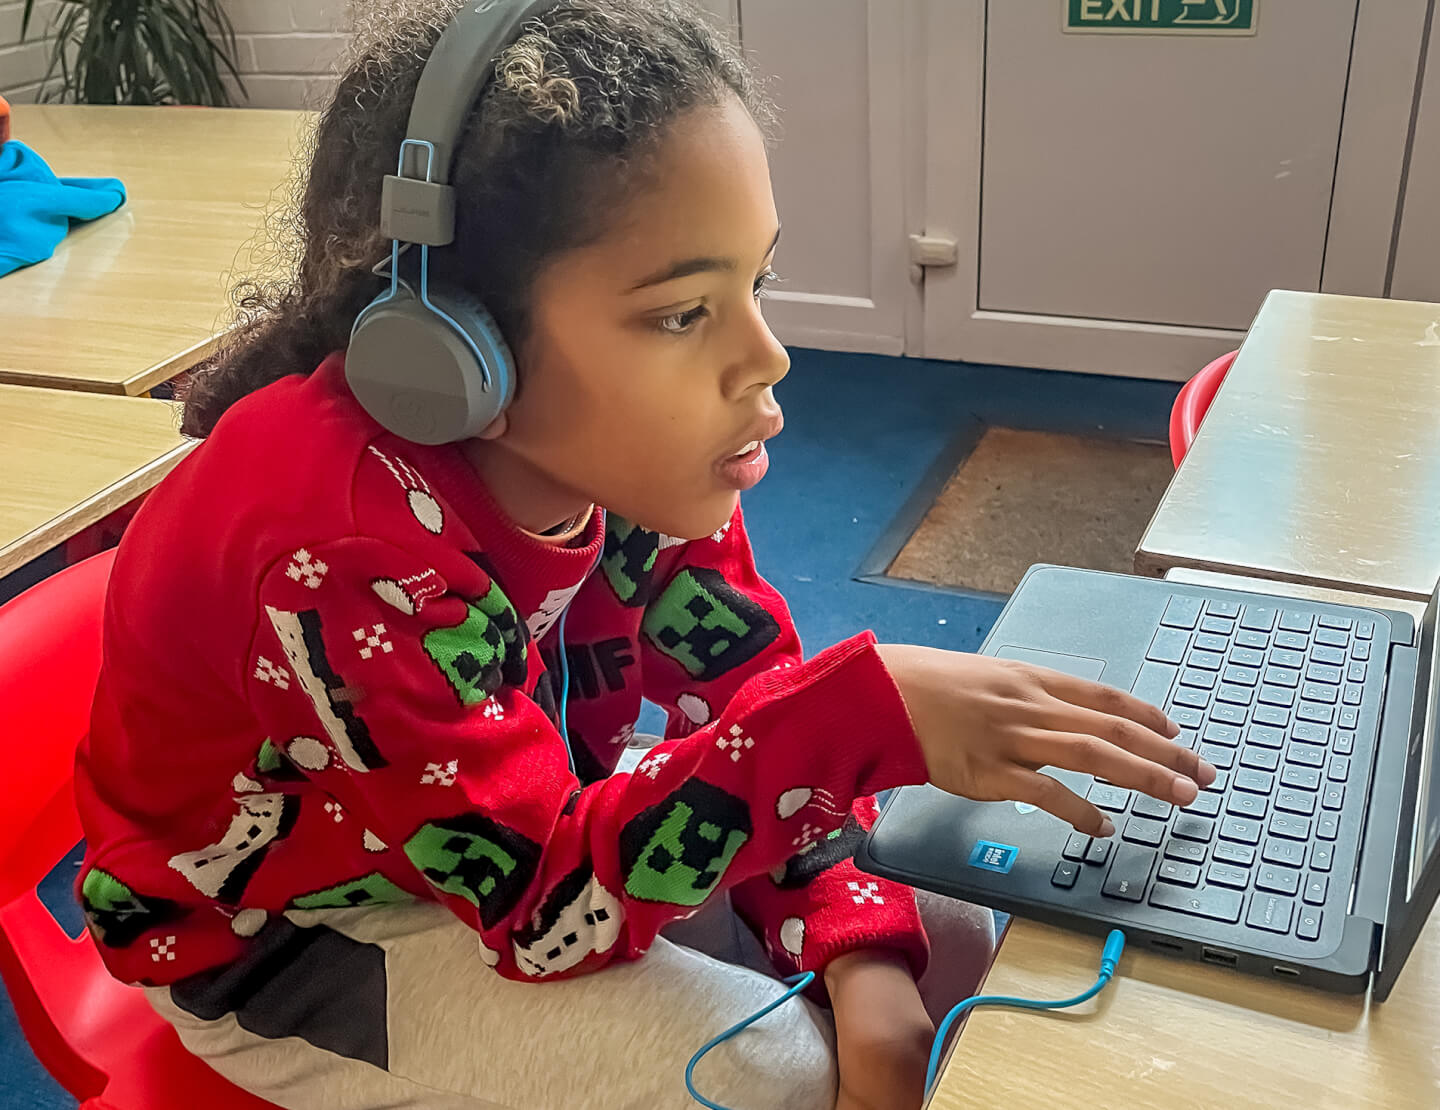 Child wearing headphones while using laptop